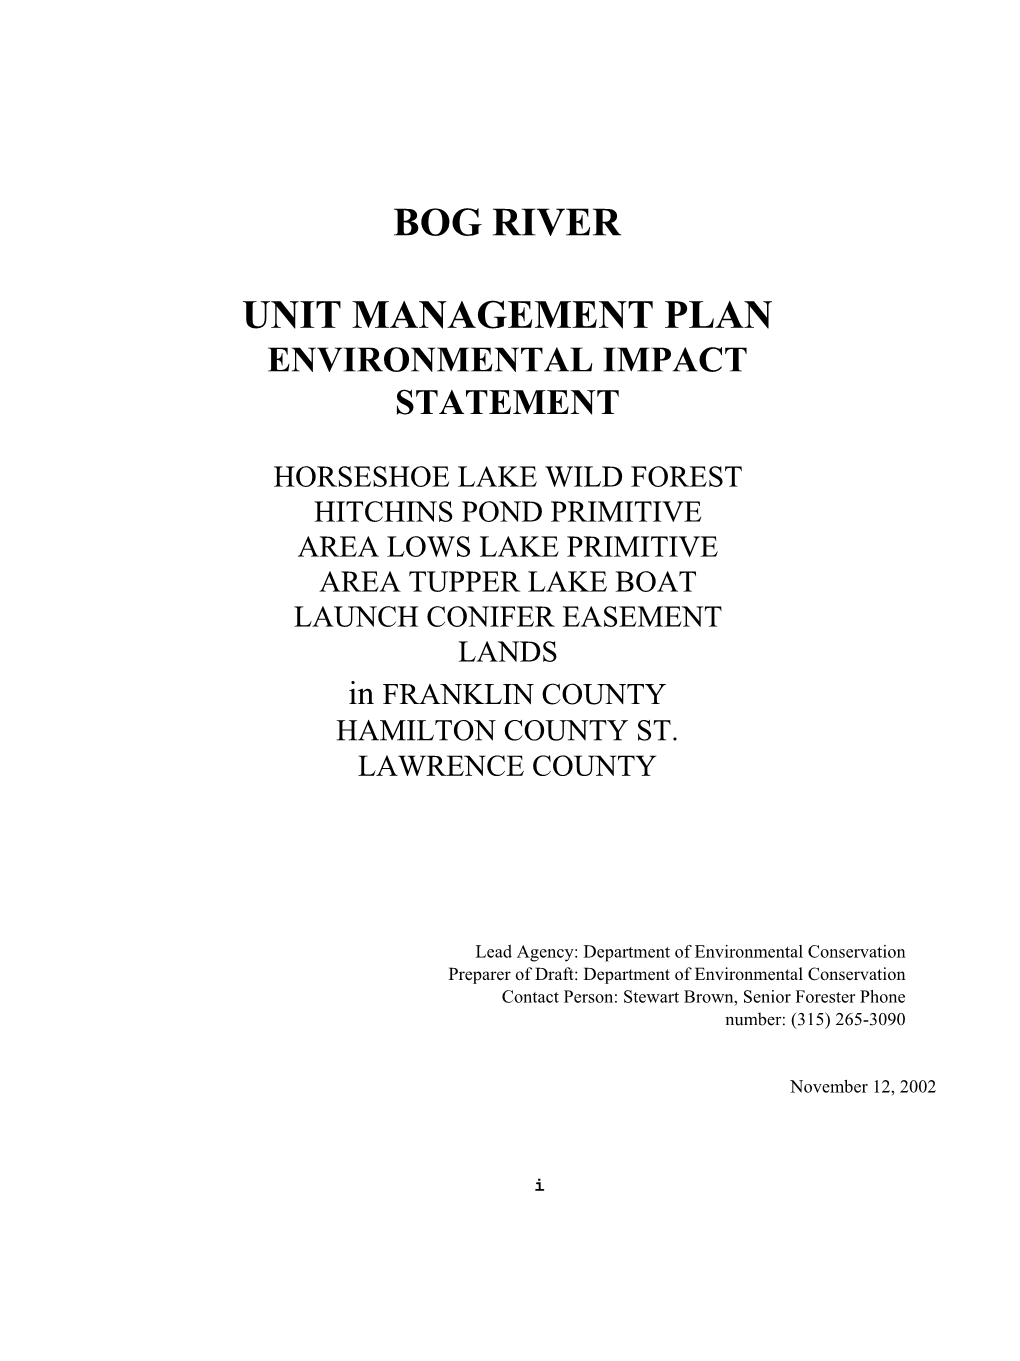 Bog River Unit Management Plan